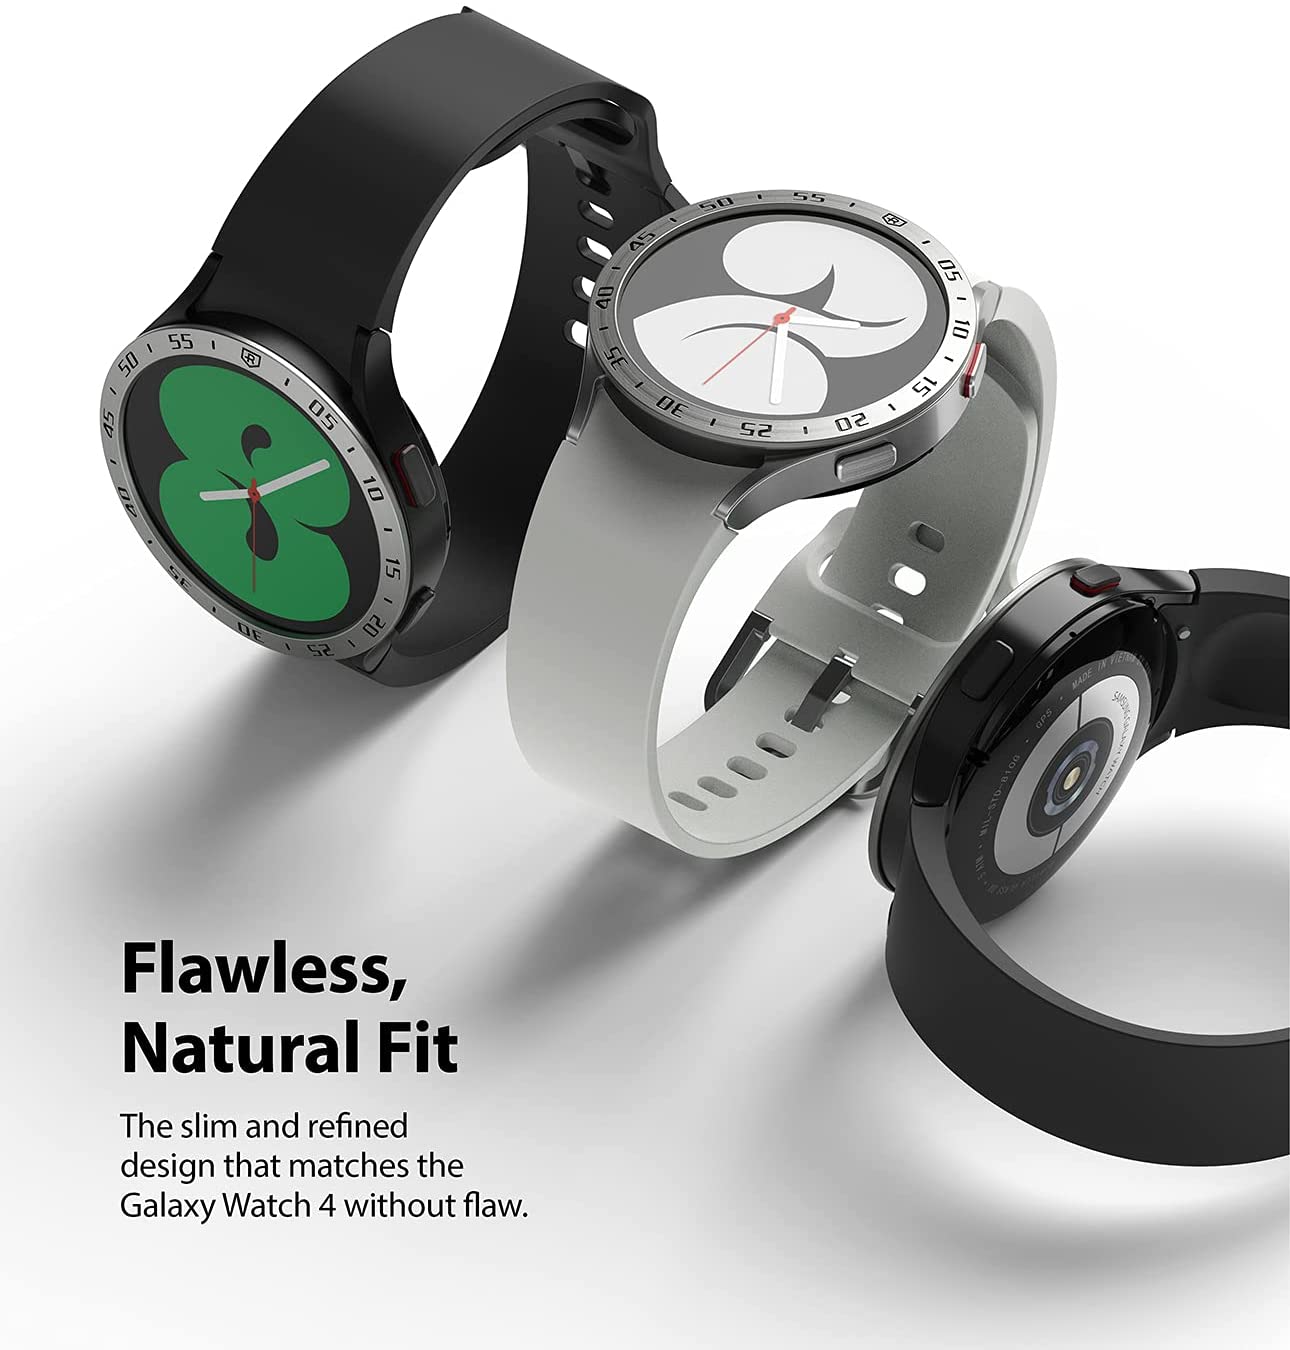 Bezel Styling Samsung Galaxy Watch 5 40mm Silber